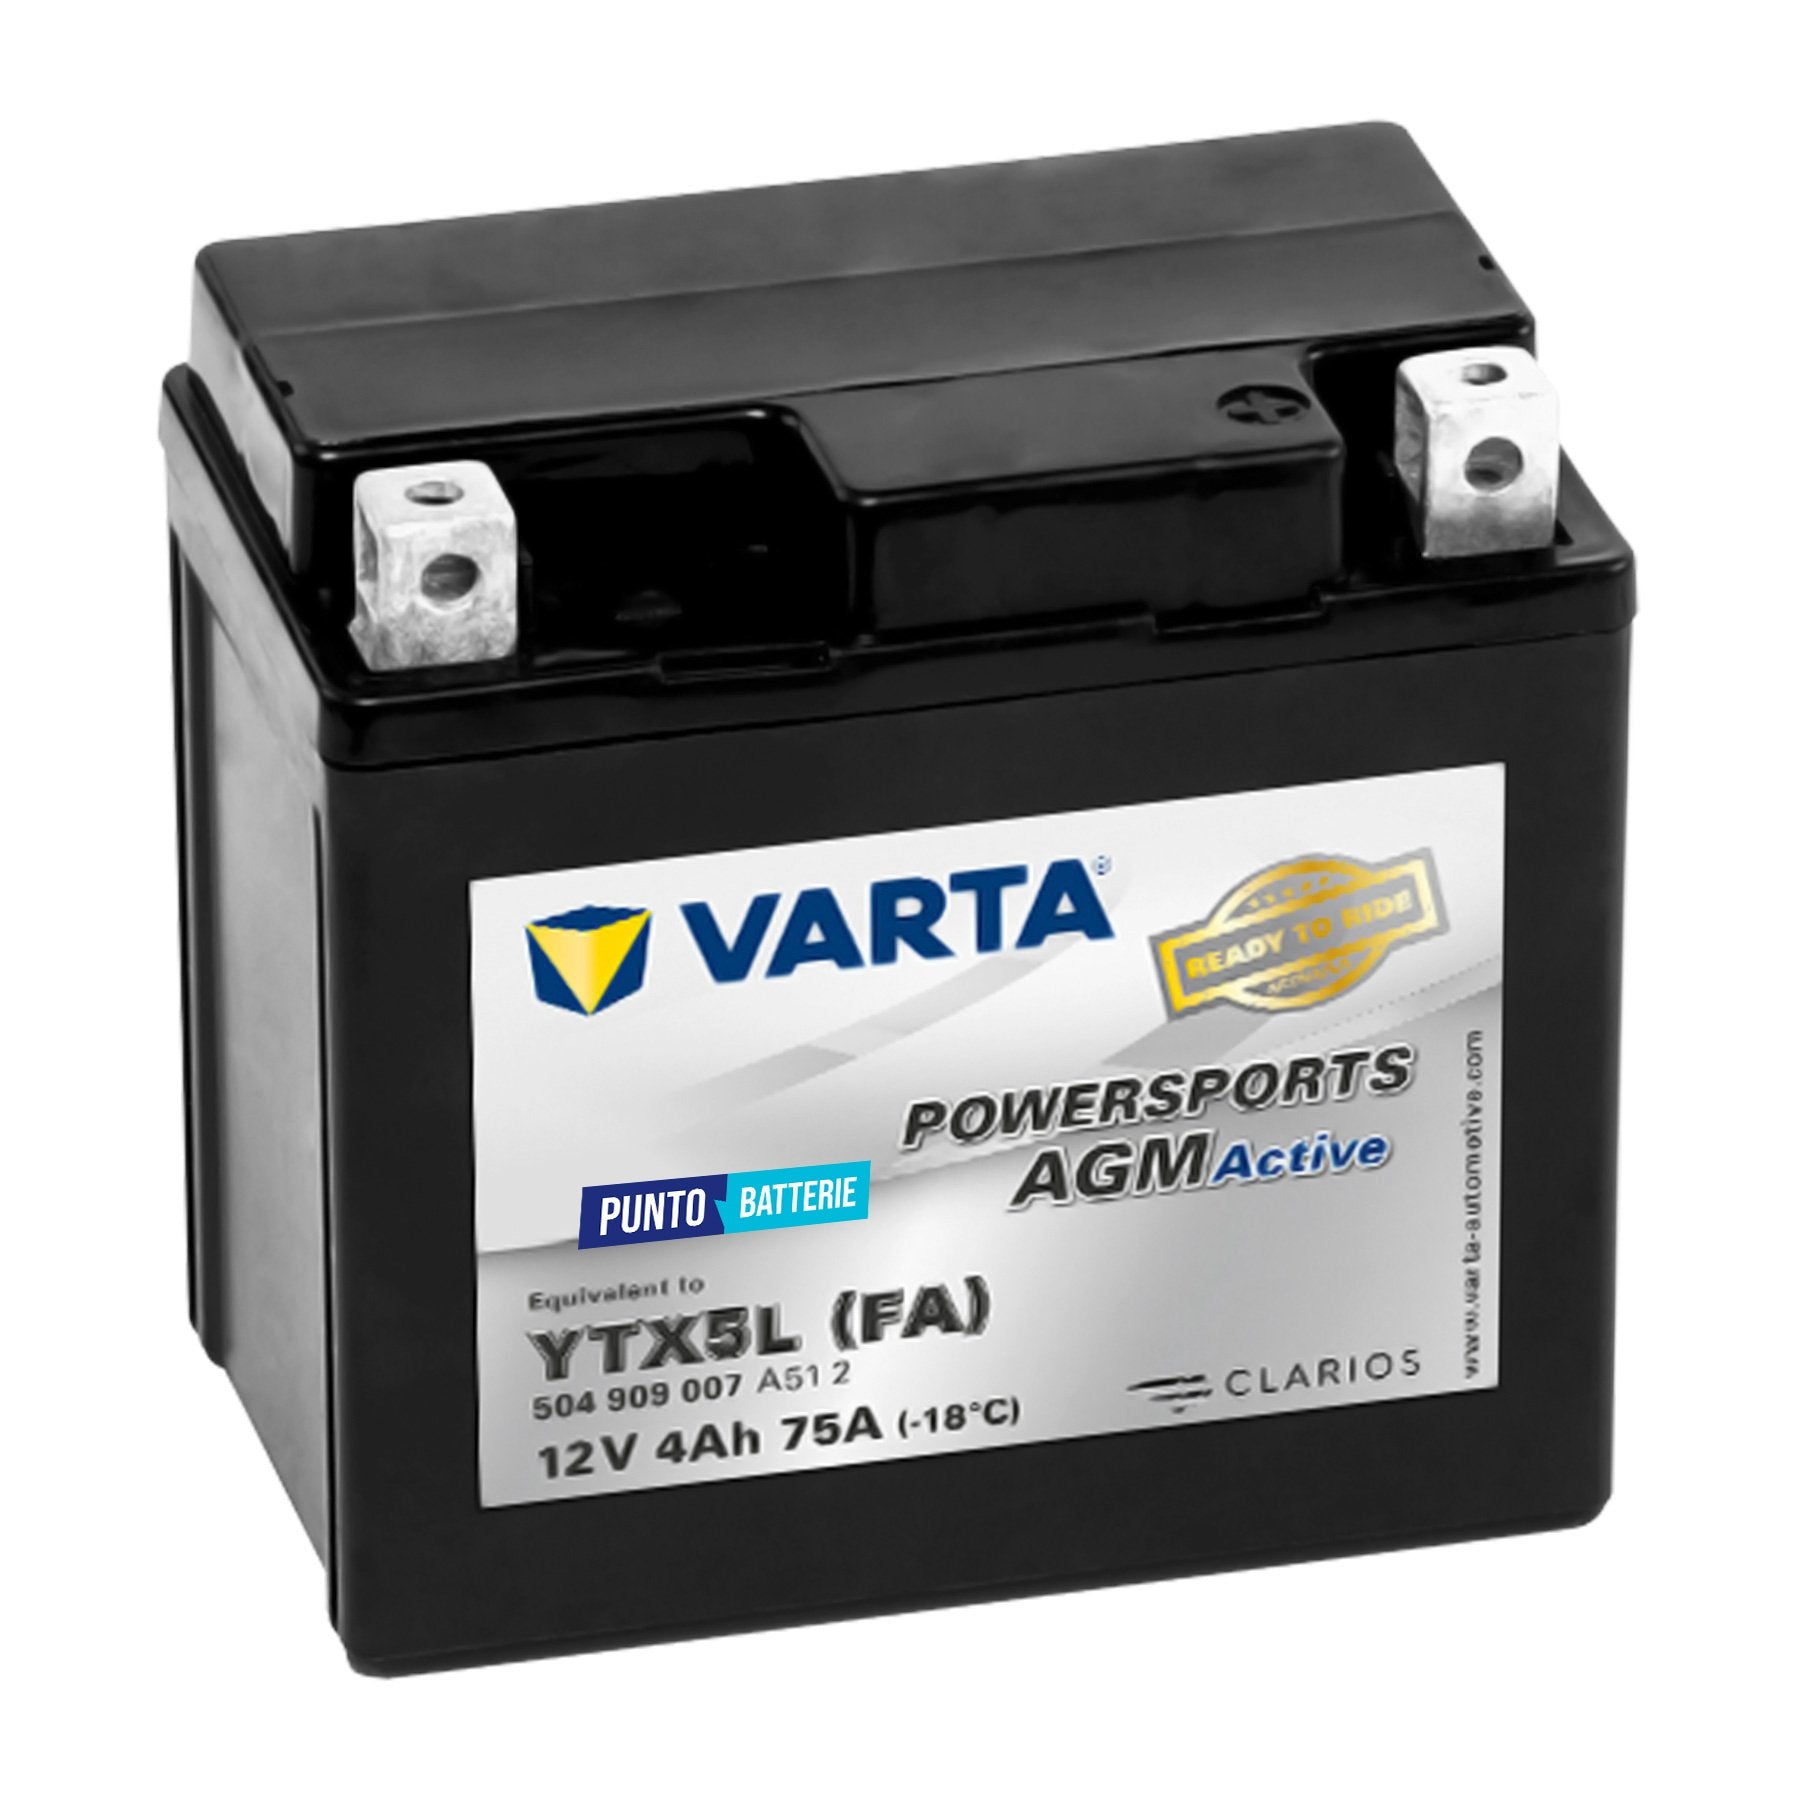 Batteria originale Varta Powersport AGM Active YTX5L-FA, dimensioni 166 x 127 x 175, polo positivo a destra, 12 volt, 4 amperora, 75 ampere. Batteria per moto, scooter e powersport.